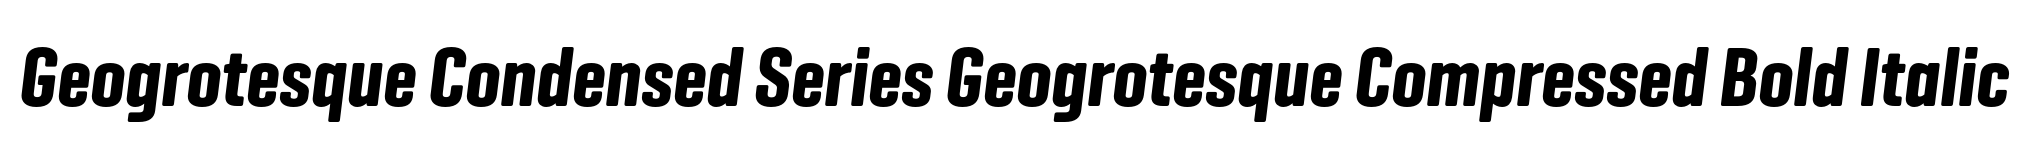 Geogrotesque Condensed Series Geogrotesque Compressed Bold Italic image